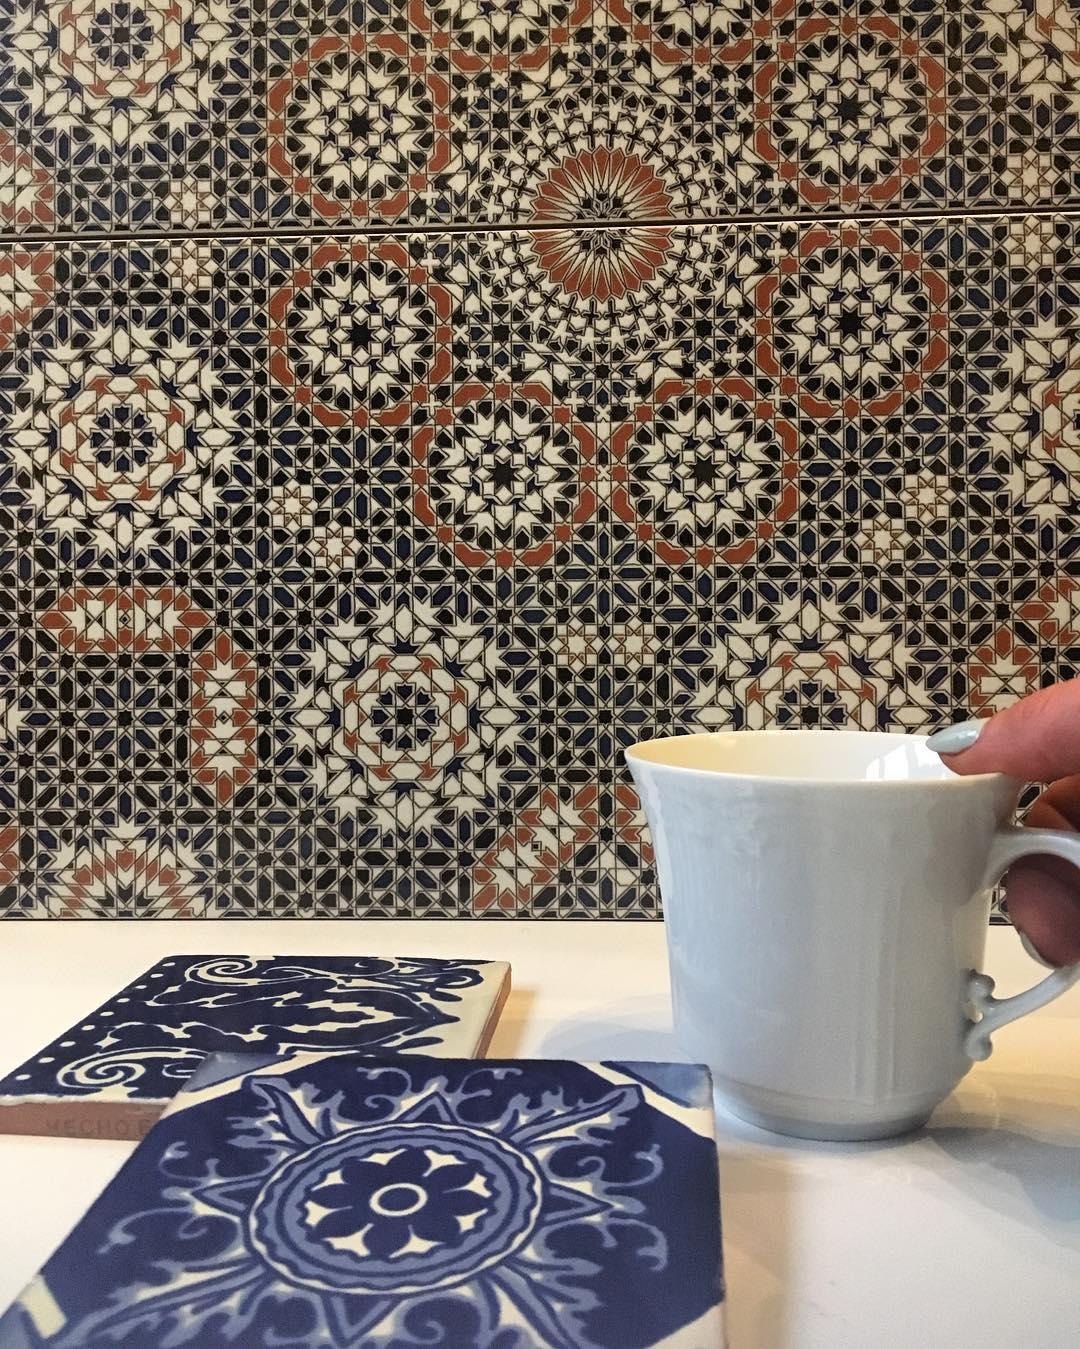 Marokkanische und mexikanische Fliesen #tiles #walltiles #decor #homedecor #dekor #kacheln #kueche #kokken #cerames

